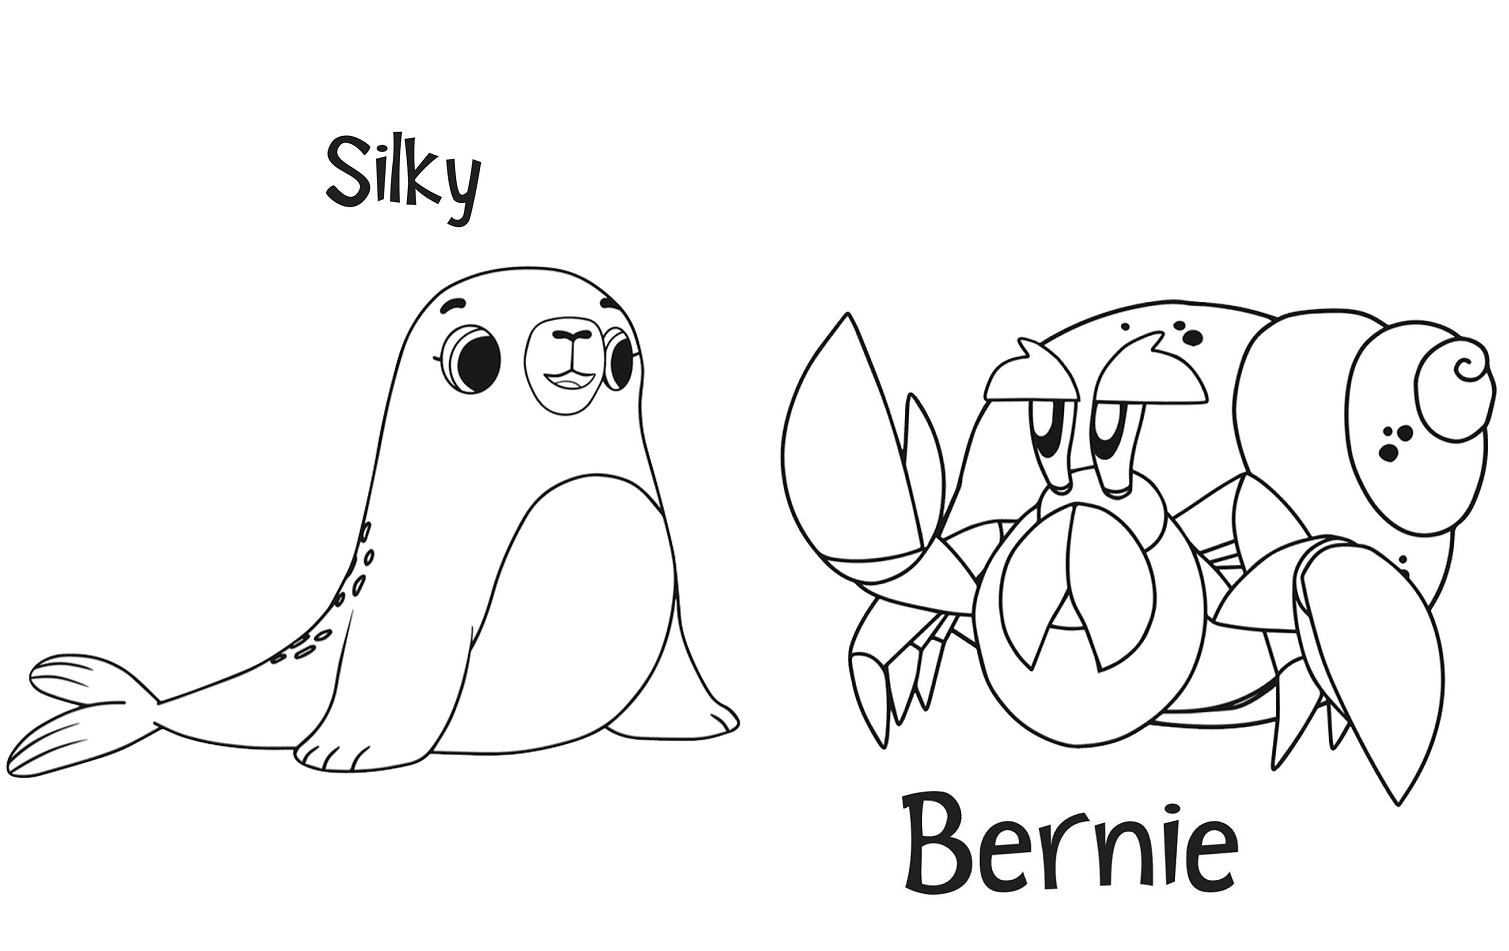 Silky e Bernie de Puffin Rock